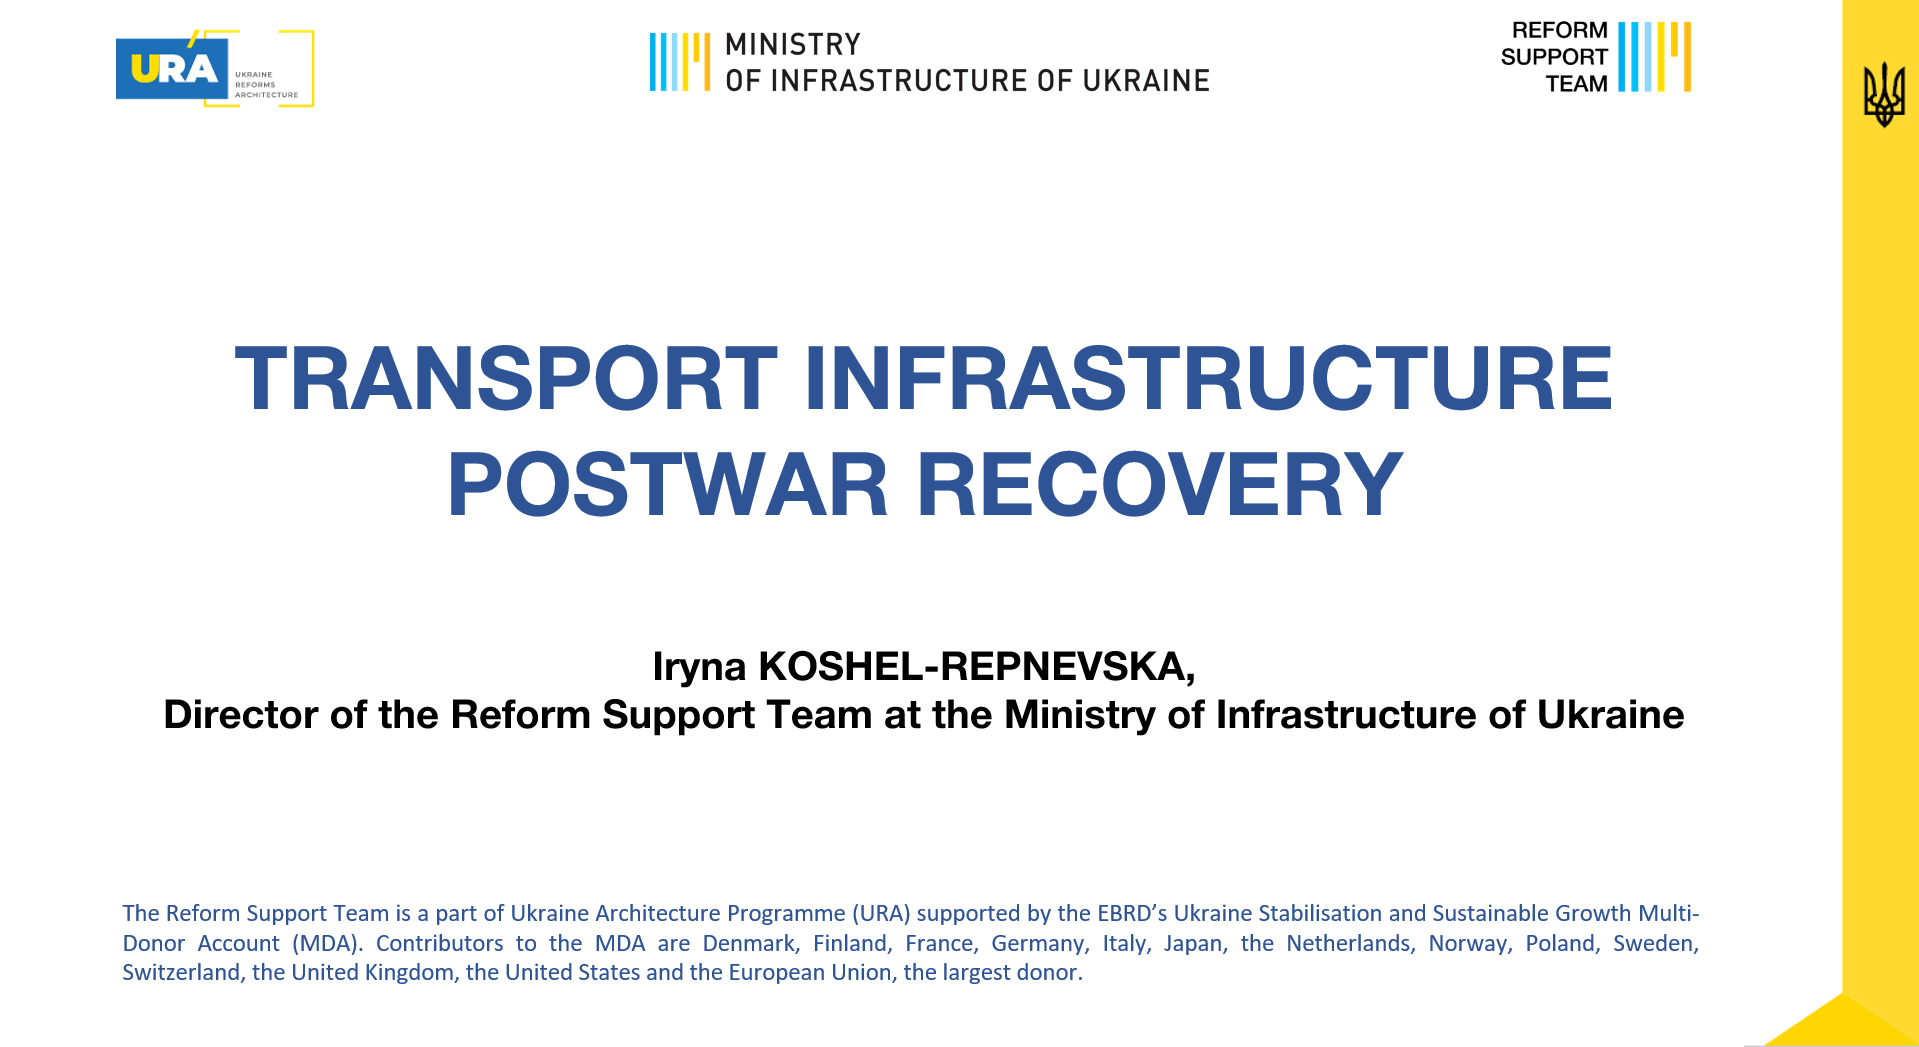 Presentations of government’s priorities in recovering Ukraine’s transport infrastructure